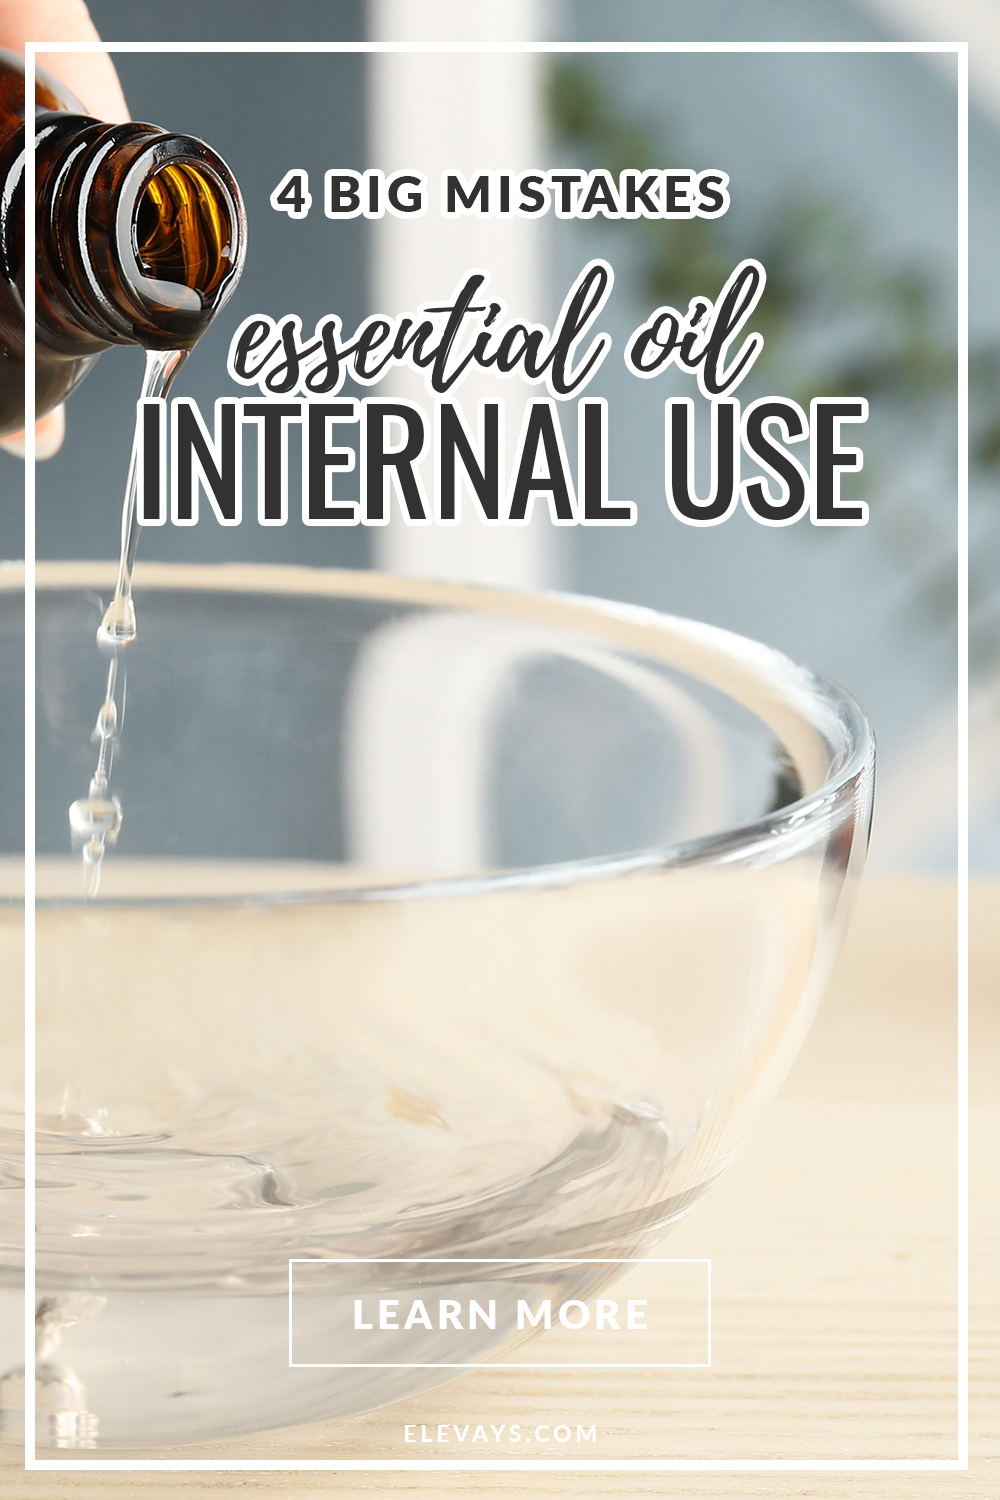 4 Big Mistakes when Taking Essential Oils Internally